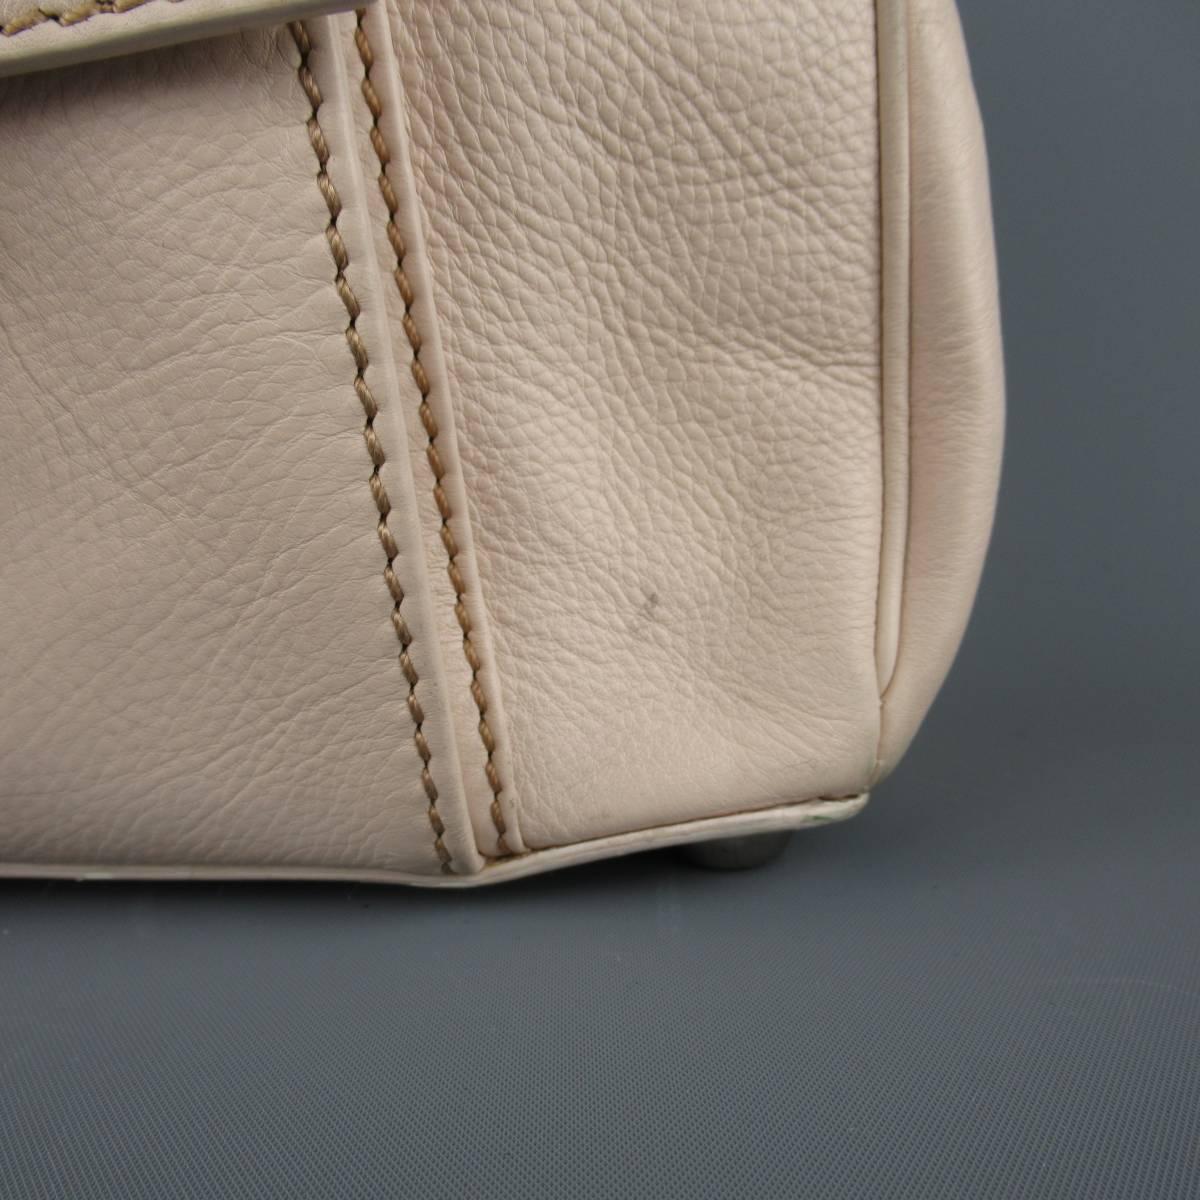 MARC JACOBS Cream Beige Leather 2 Pocket Top Handles VENETA Handbag 4